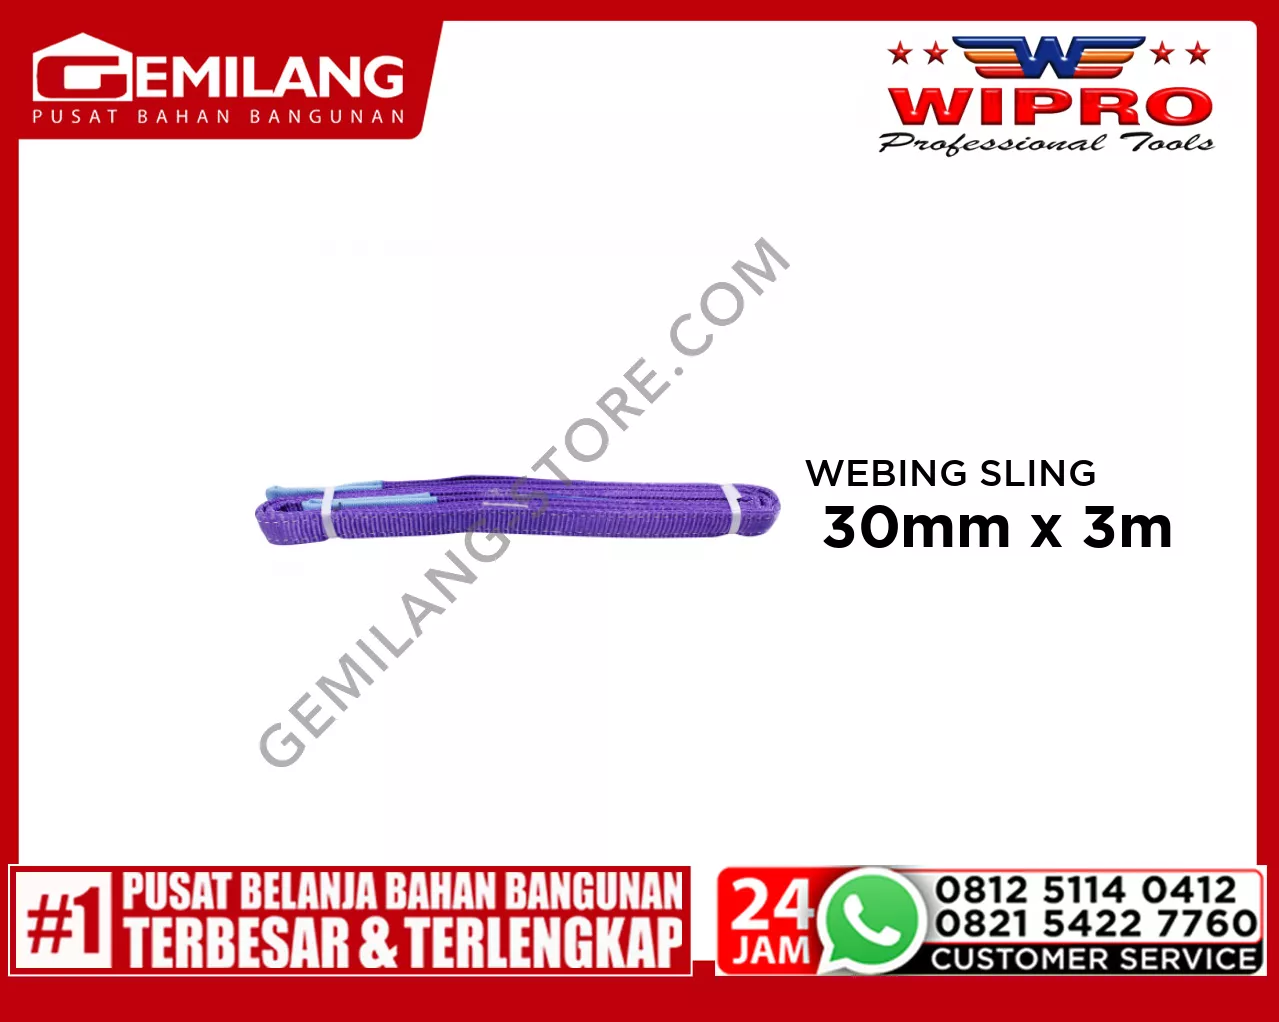 WIPRO WEBING SLING WLL1T3 (UNGU) 30mm x 3m